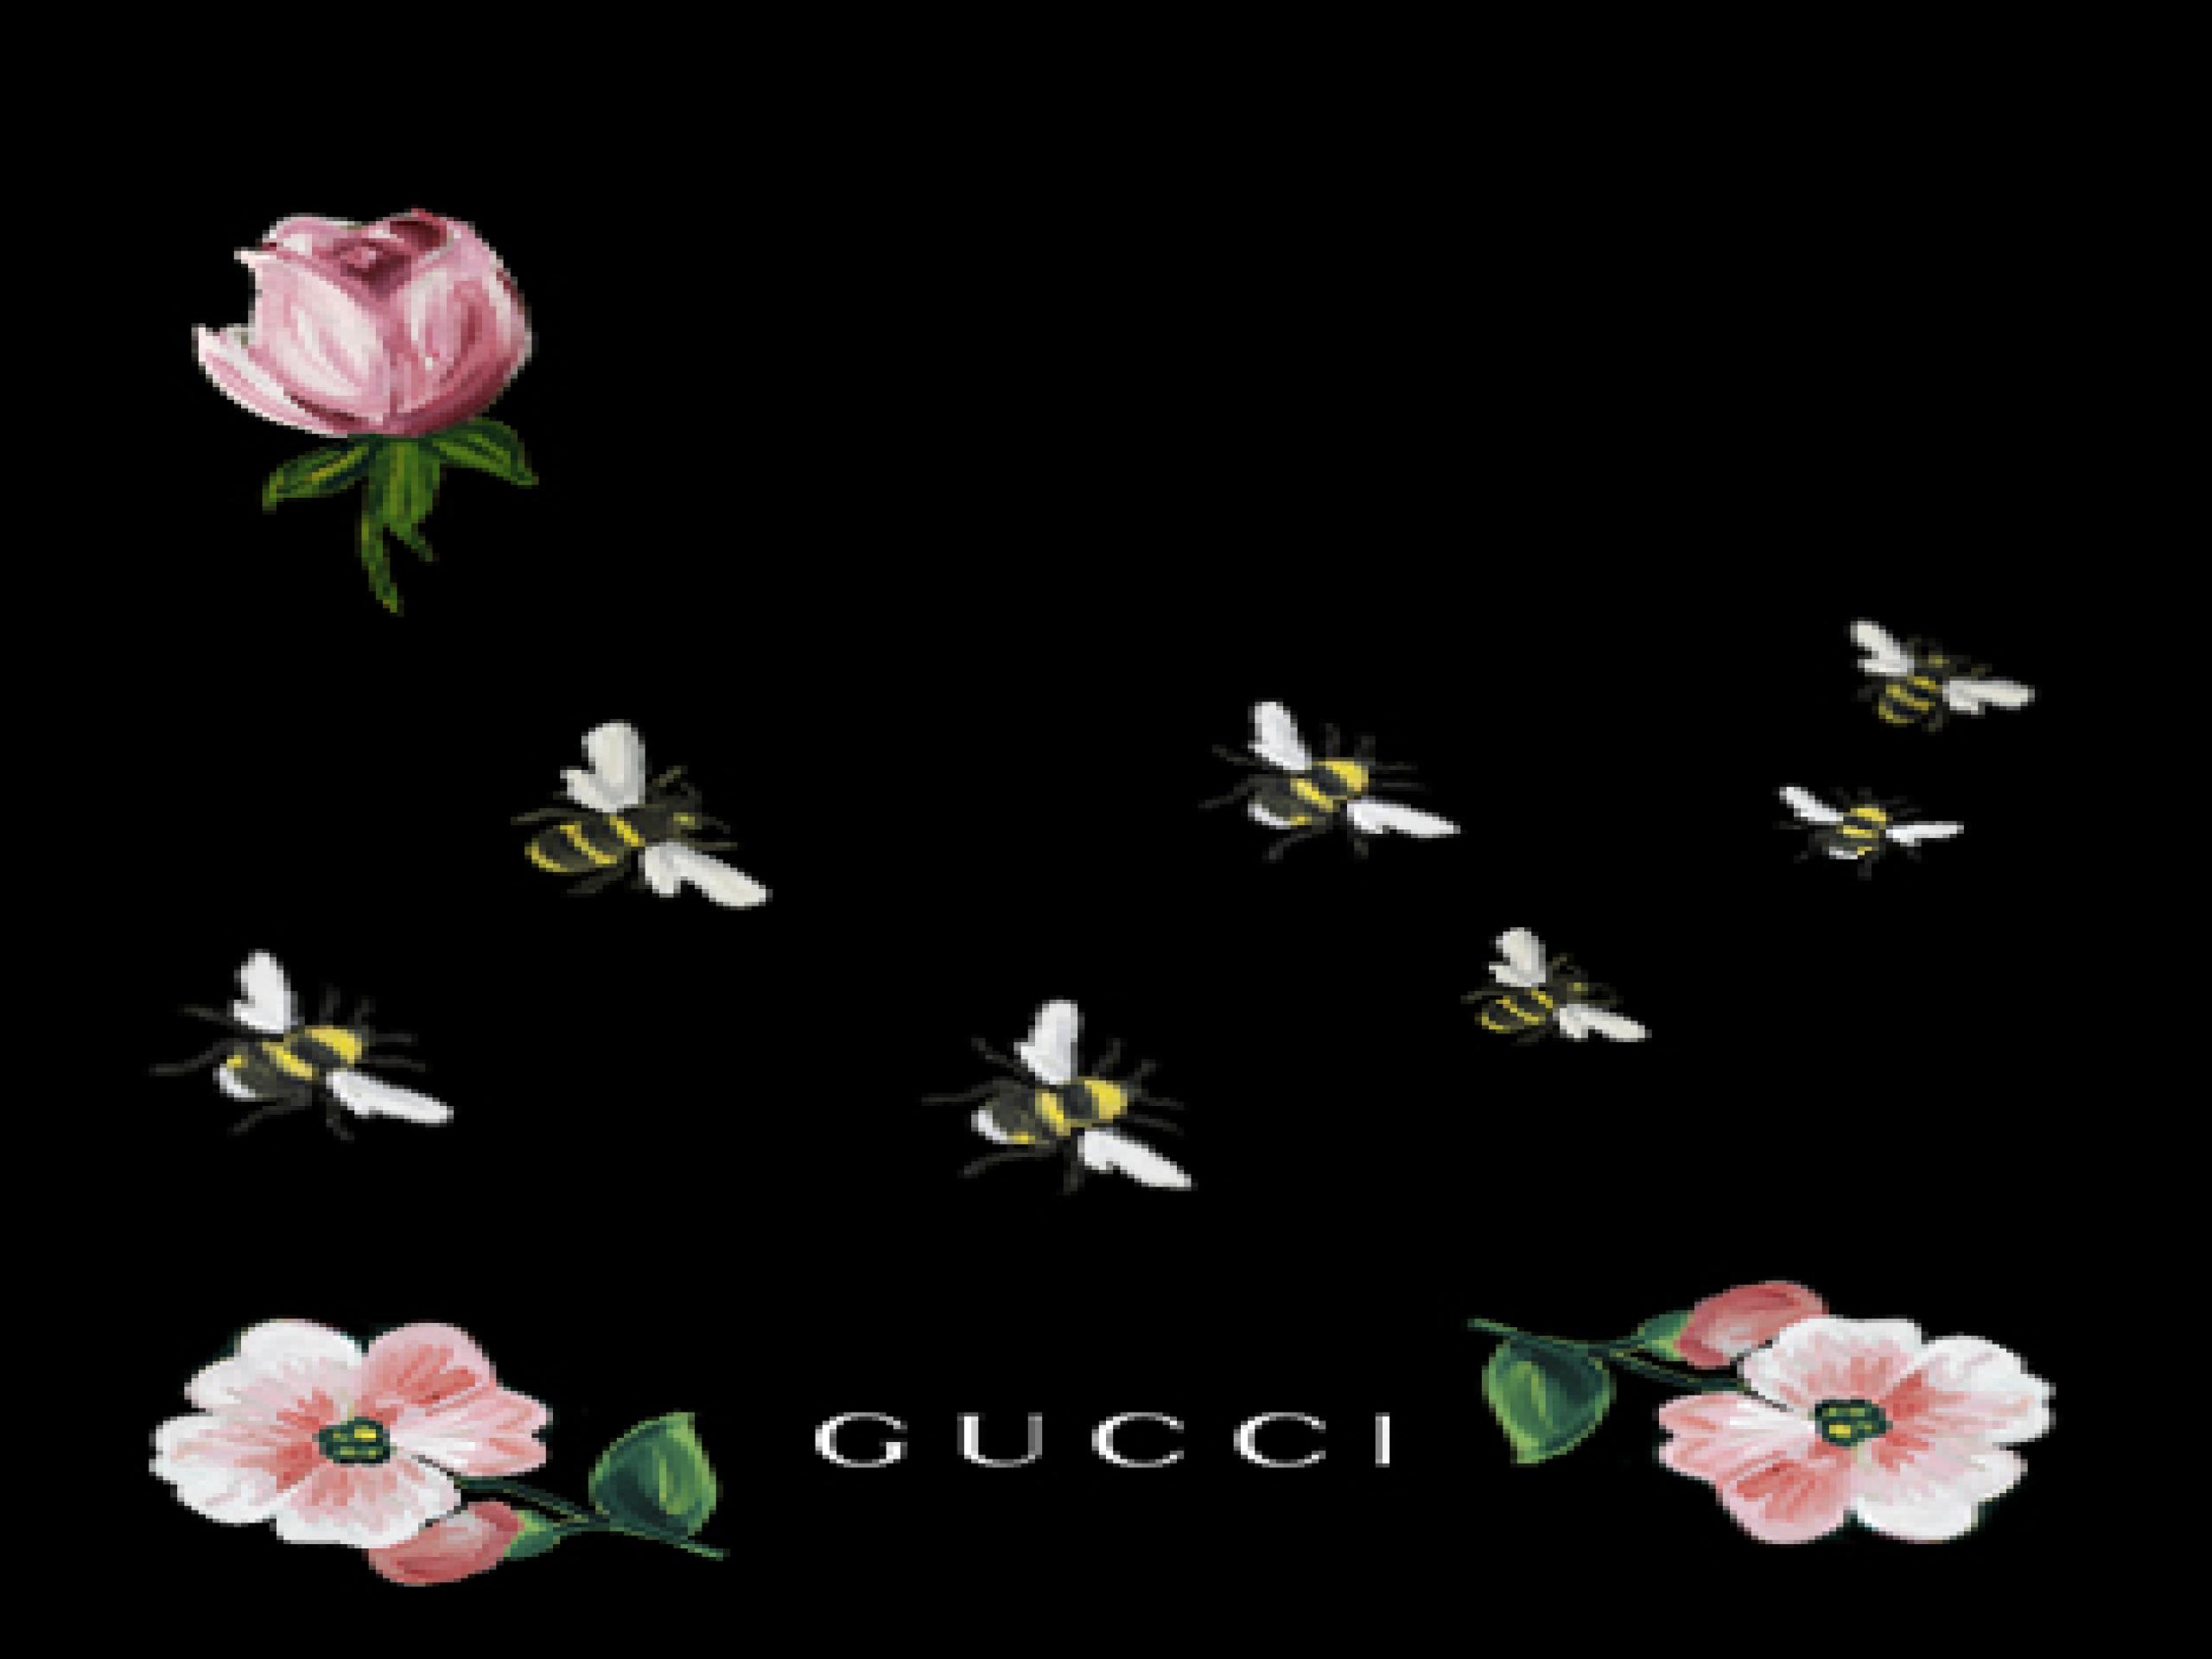 Gucci Wallpaper Hd - 2560x1920 Wallpaper - teahub.io